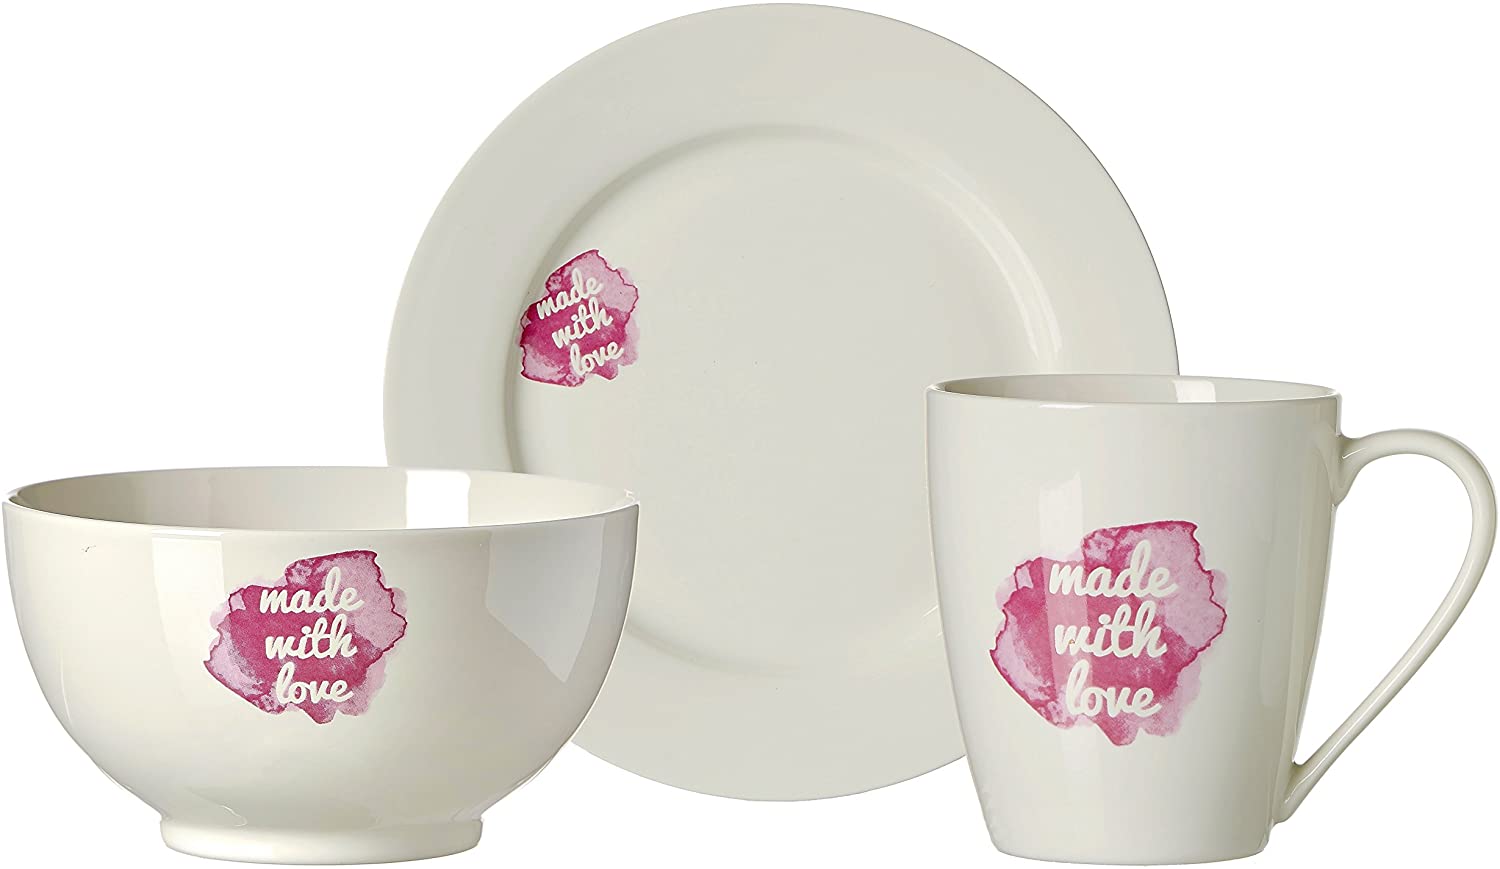 Zauberwerk Love Brunch and Breakfast Set, 3 Pieces, Porcelain